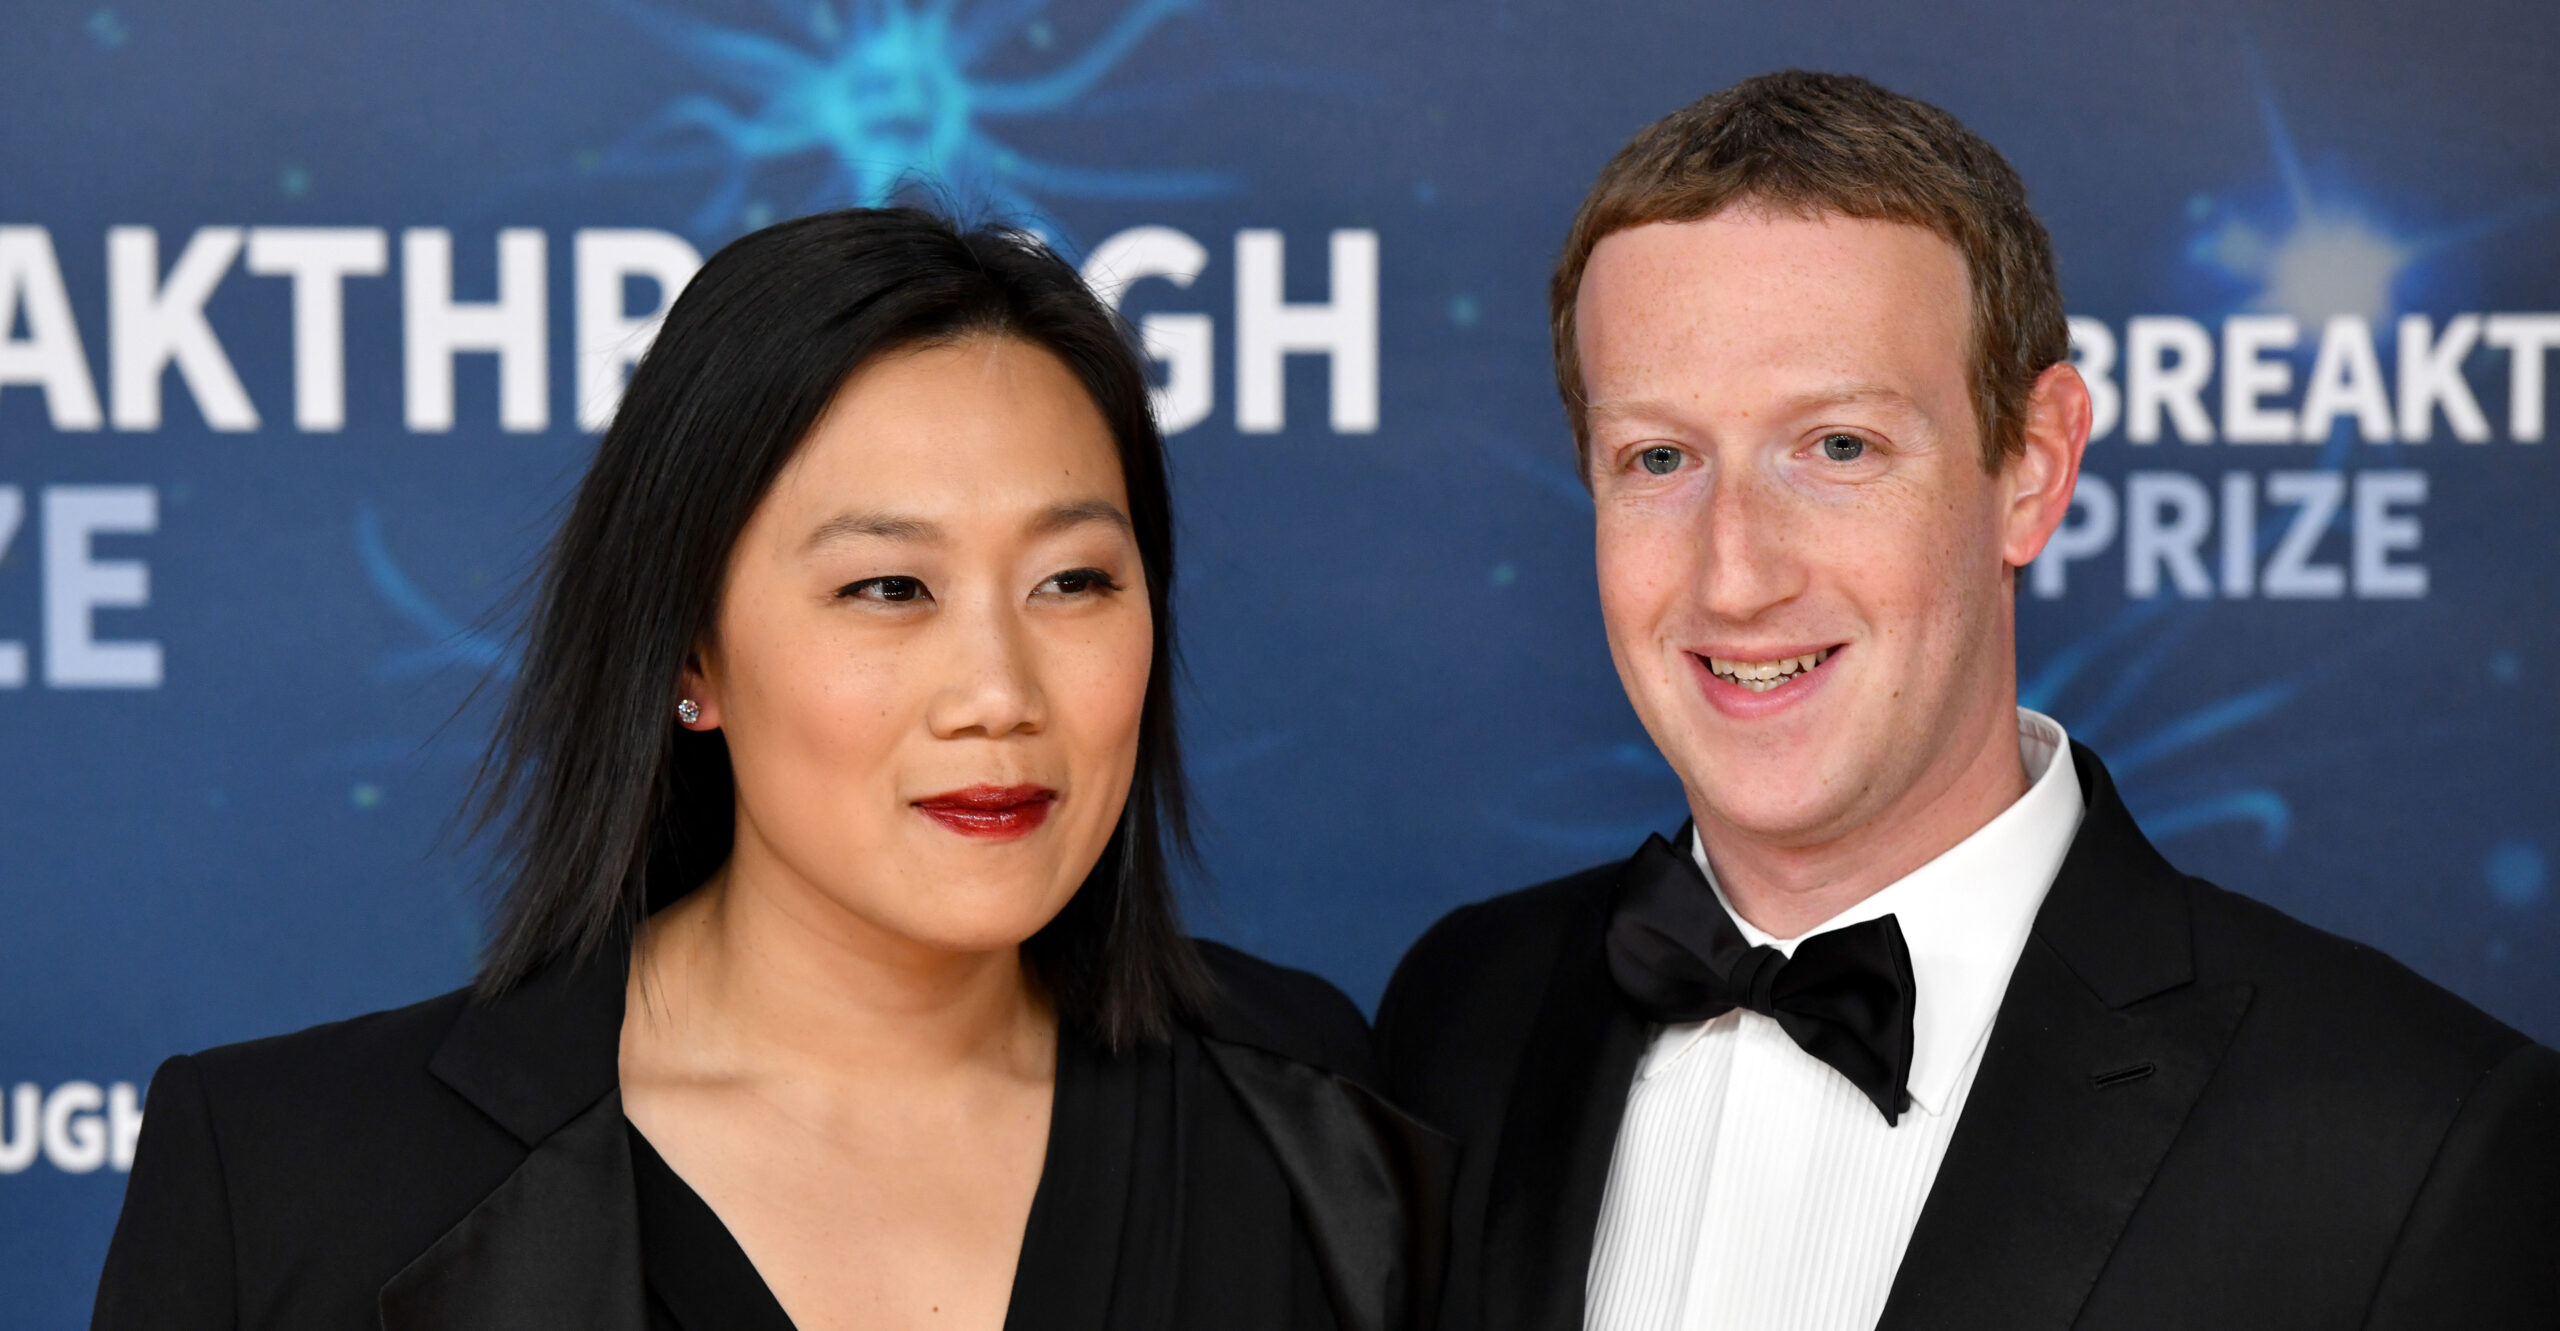 Team Zuckerberg Masks Heavily Pro-Democrat Tilt of 2020 Election 'Zuckerbucks,' Study Finds